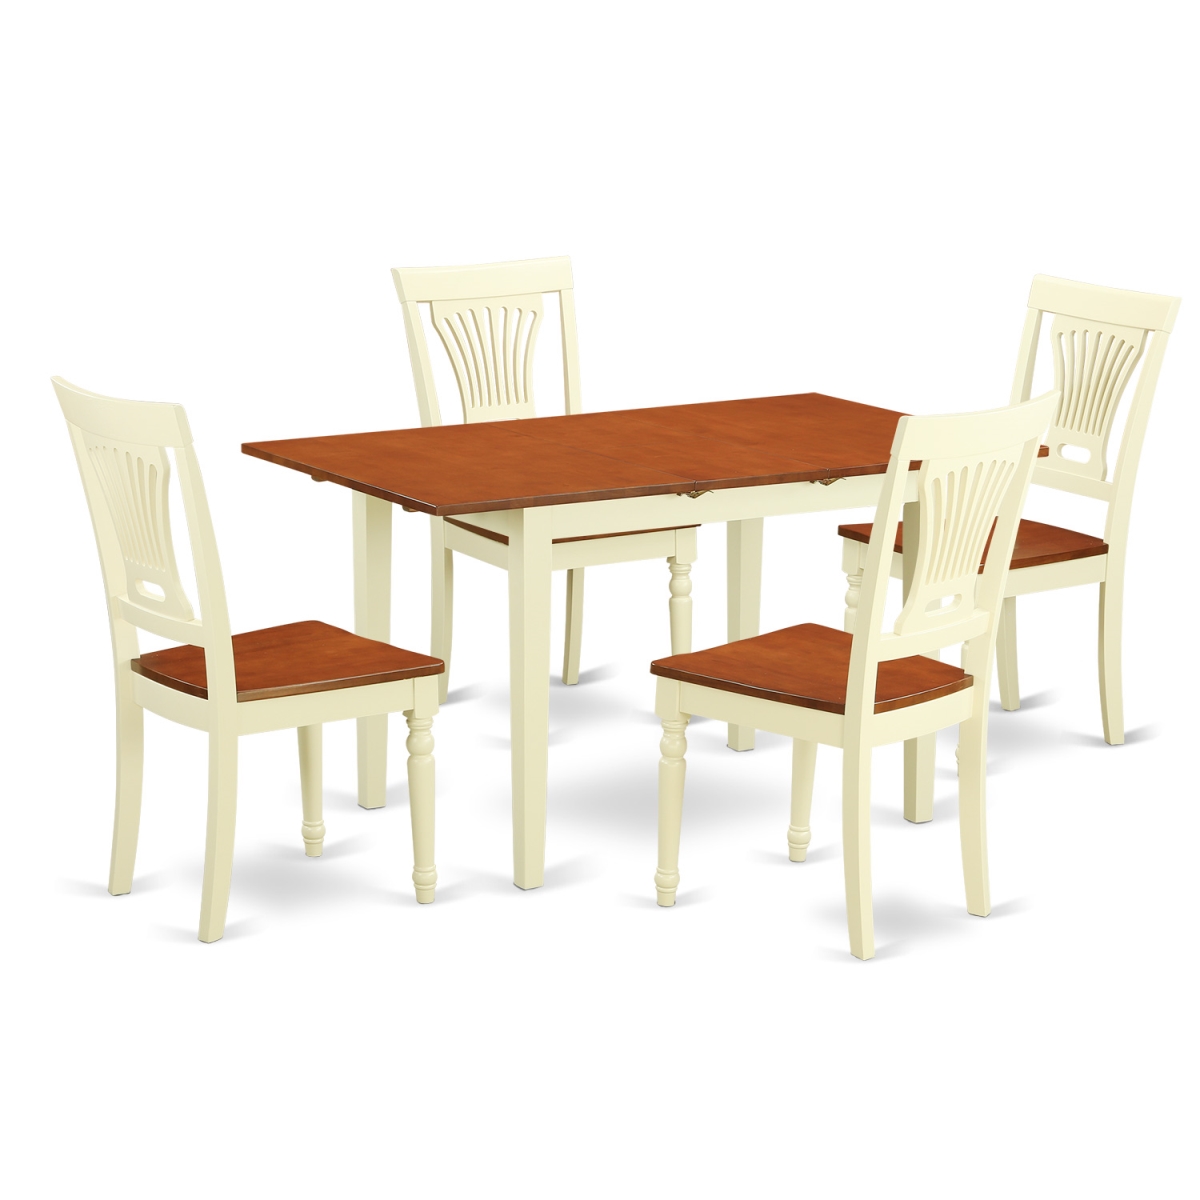 Nopl5-whi-w Wood Seat Kitchen Dinette Set - Table & 4 Chairs, Buttermilk & Cherry - 5 Piece